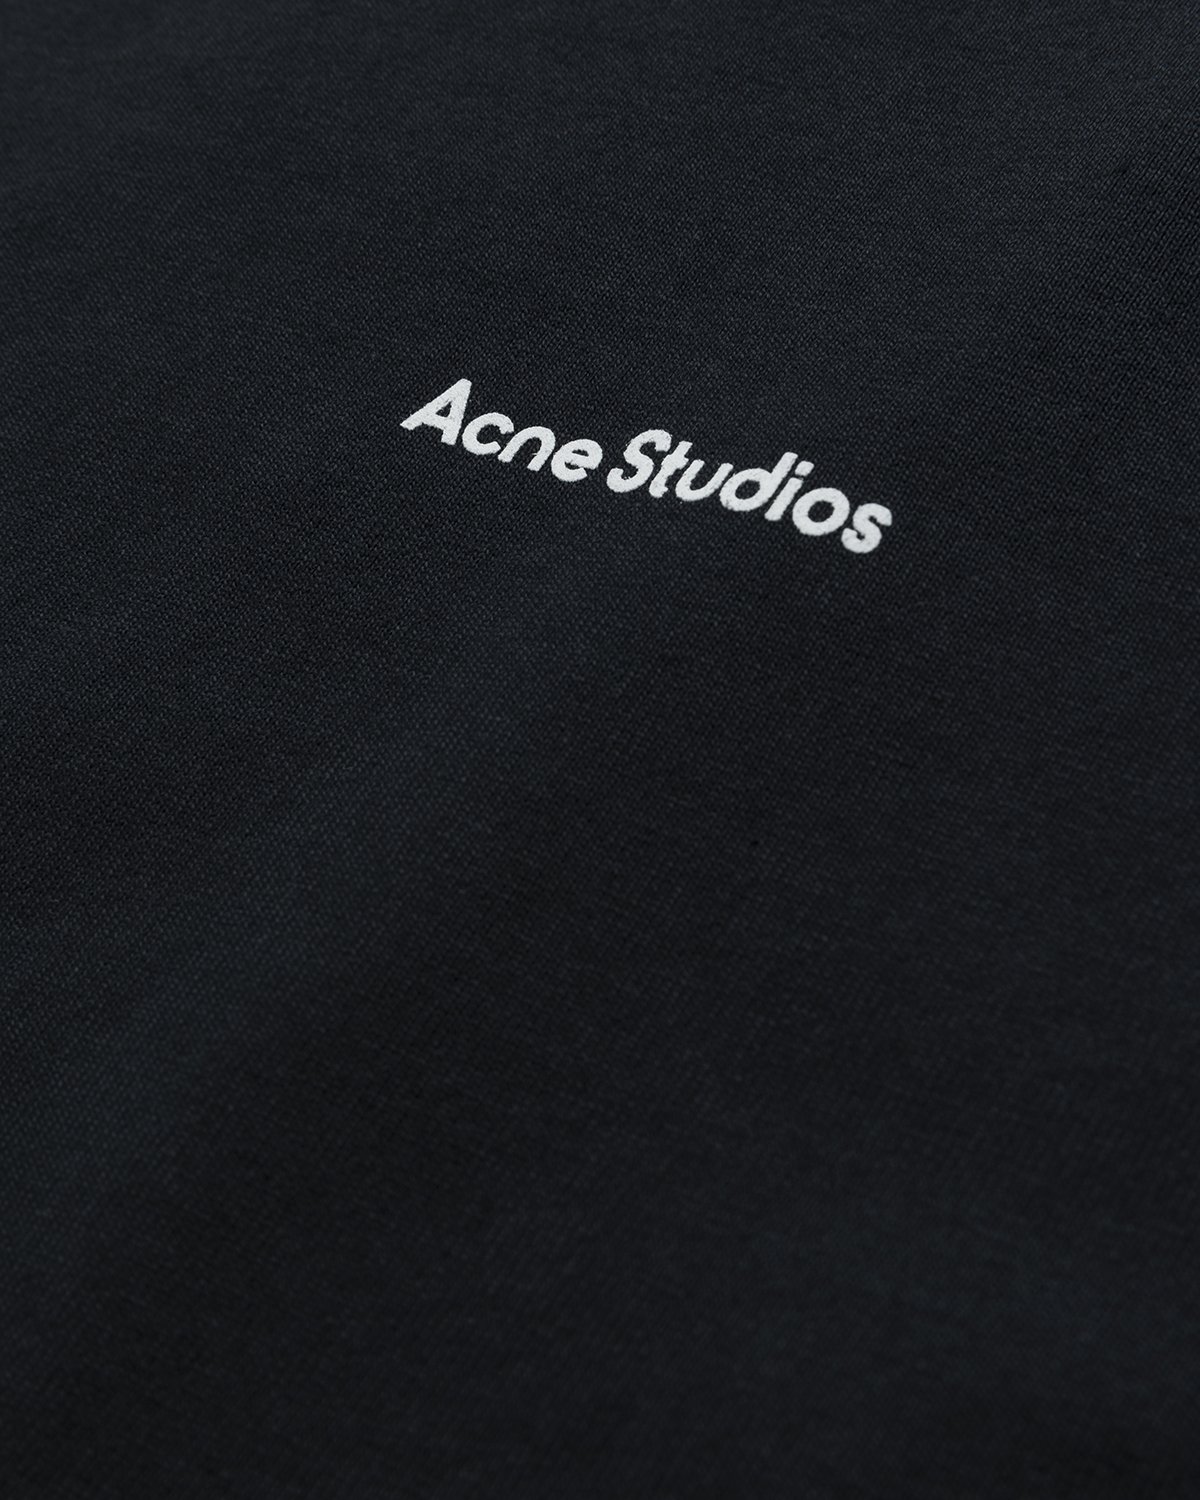 Acne Studios - Organic Cotton Logo T-Shirt Black - Clothing - Black - Image 4